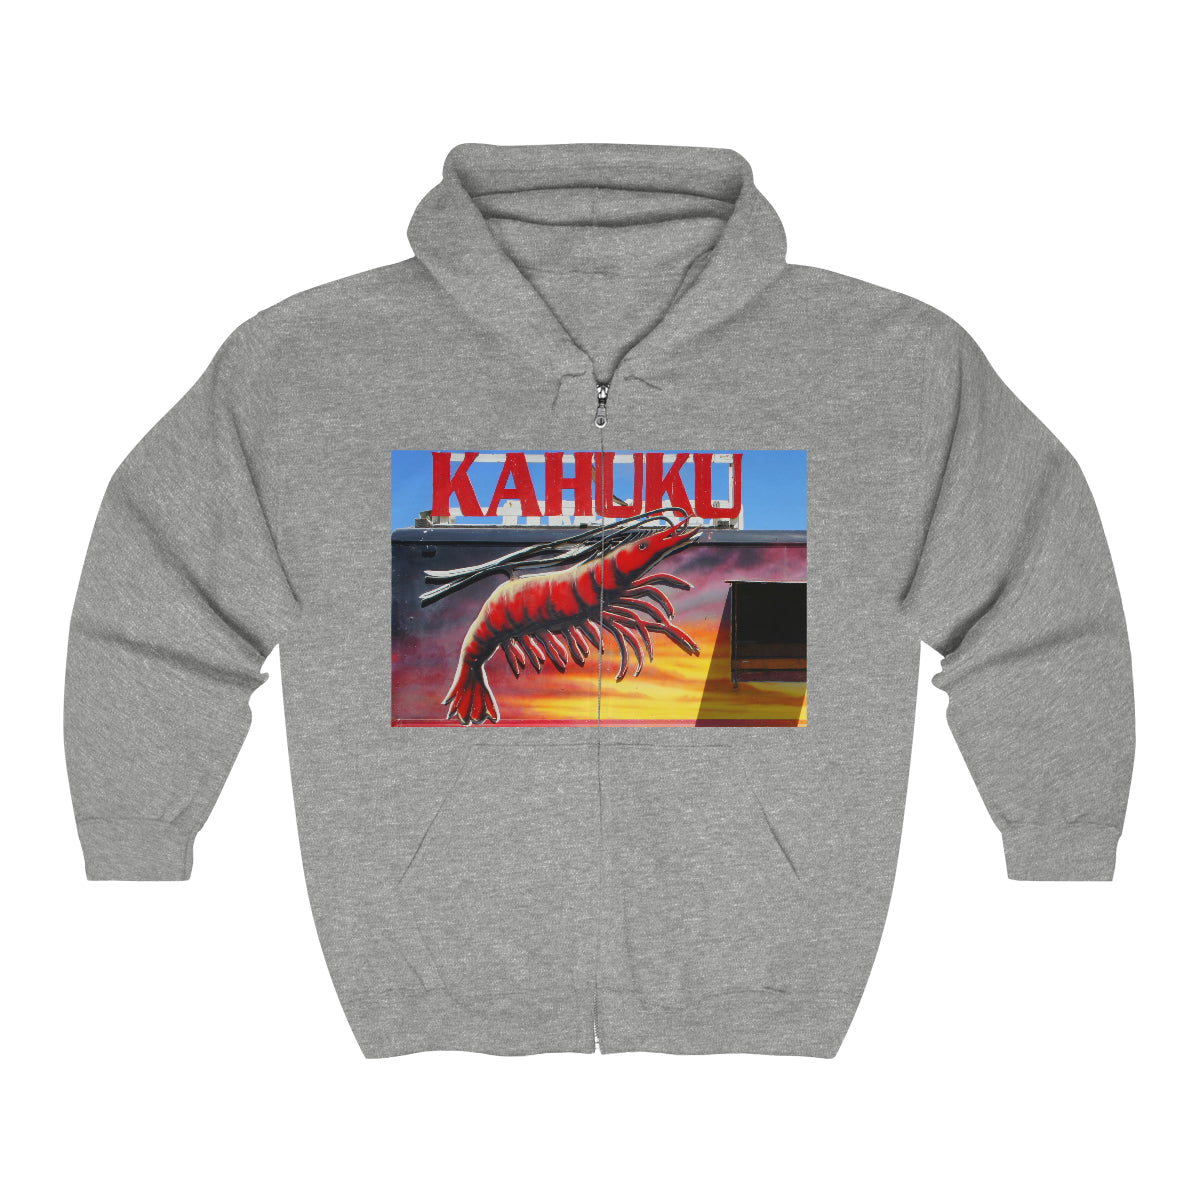 Kahuku Kai - Unisex Heavy Blend Full Zip Hooded Sweatshirt - Fry1Productions